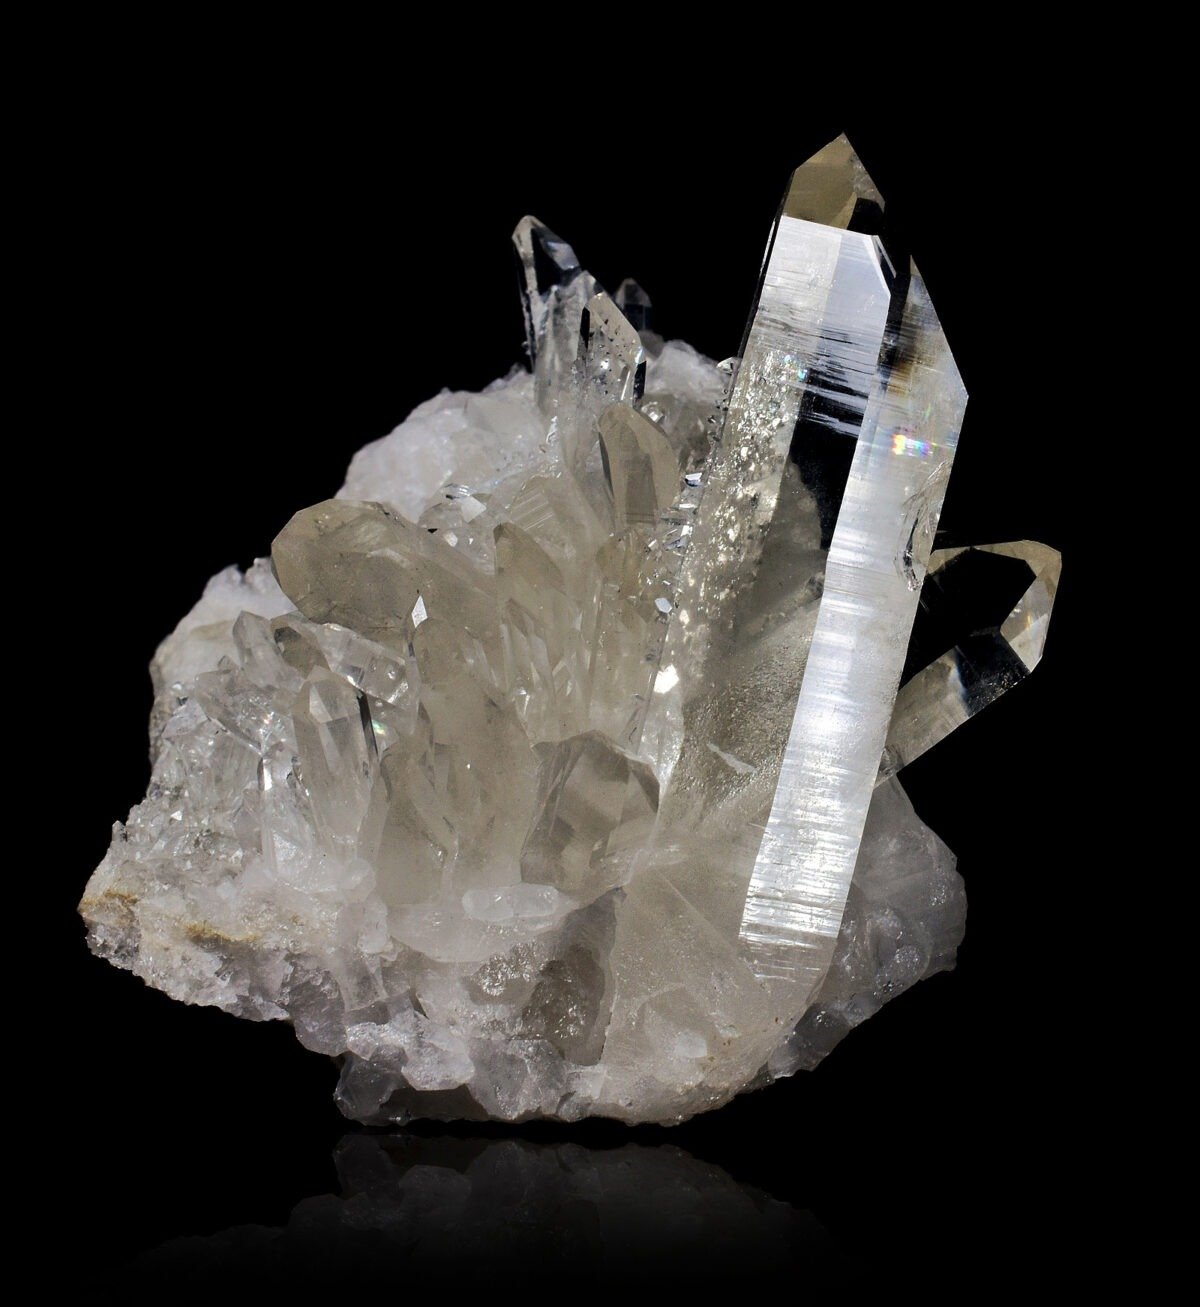 Quartz crystals from La Gardette, France